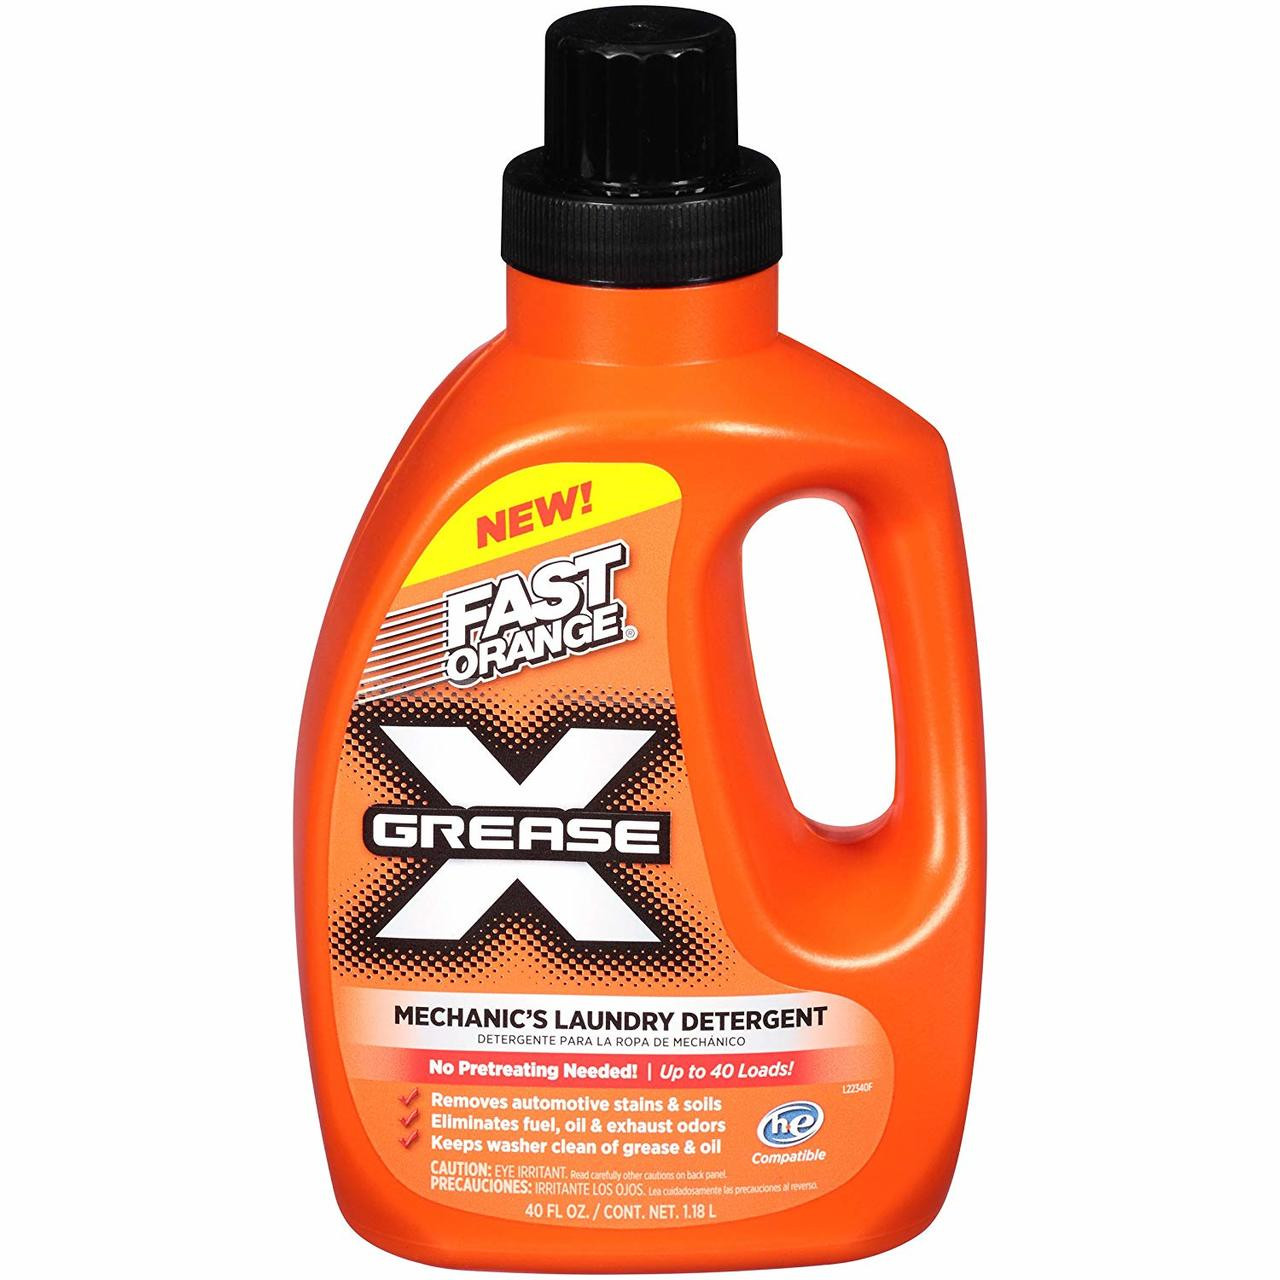 Permatex 15 oz Fast Orange Pumice Hand Cleaner